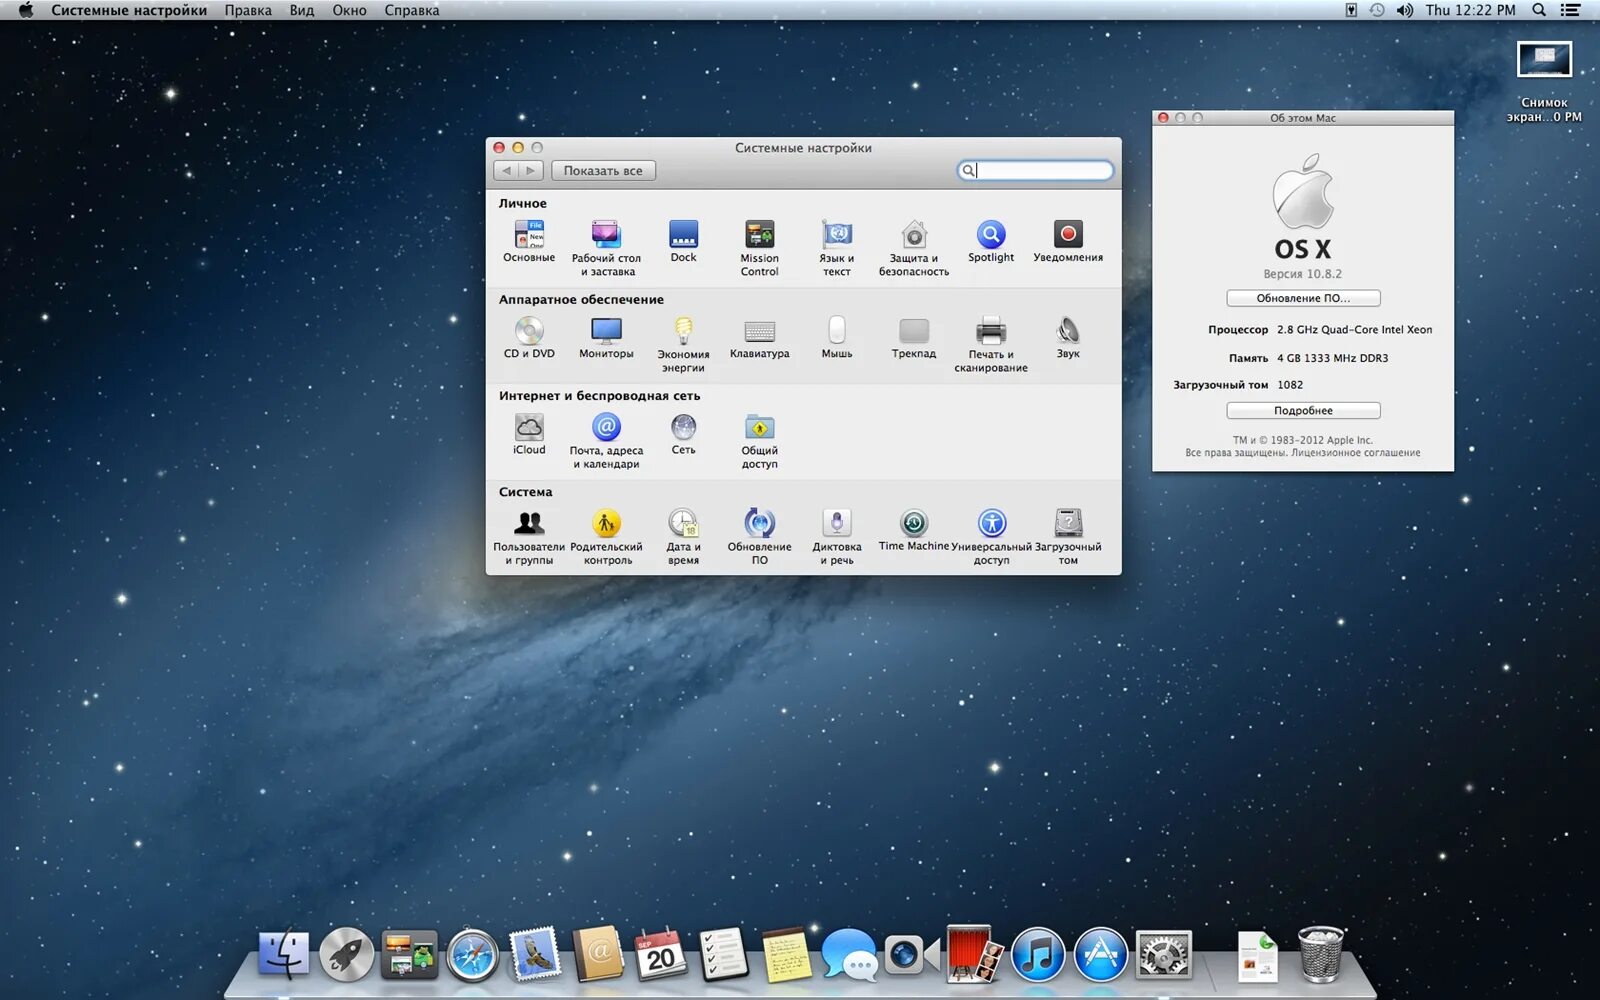 Mac os amd. (Os x Mountain Lion 10.8.2). Os x Mountain Lion 10.8.2 системные требования. Mac os x 10.8 Mountain Lion. Окно обновление Mac os.